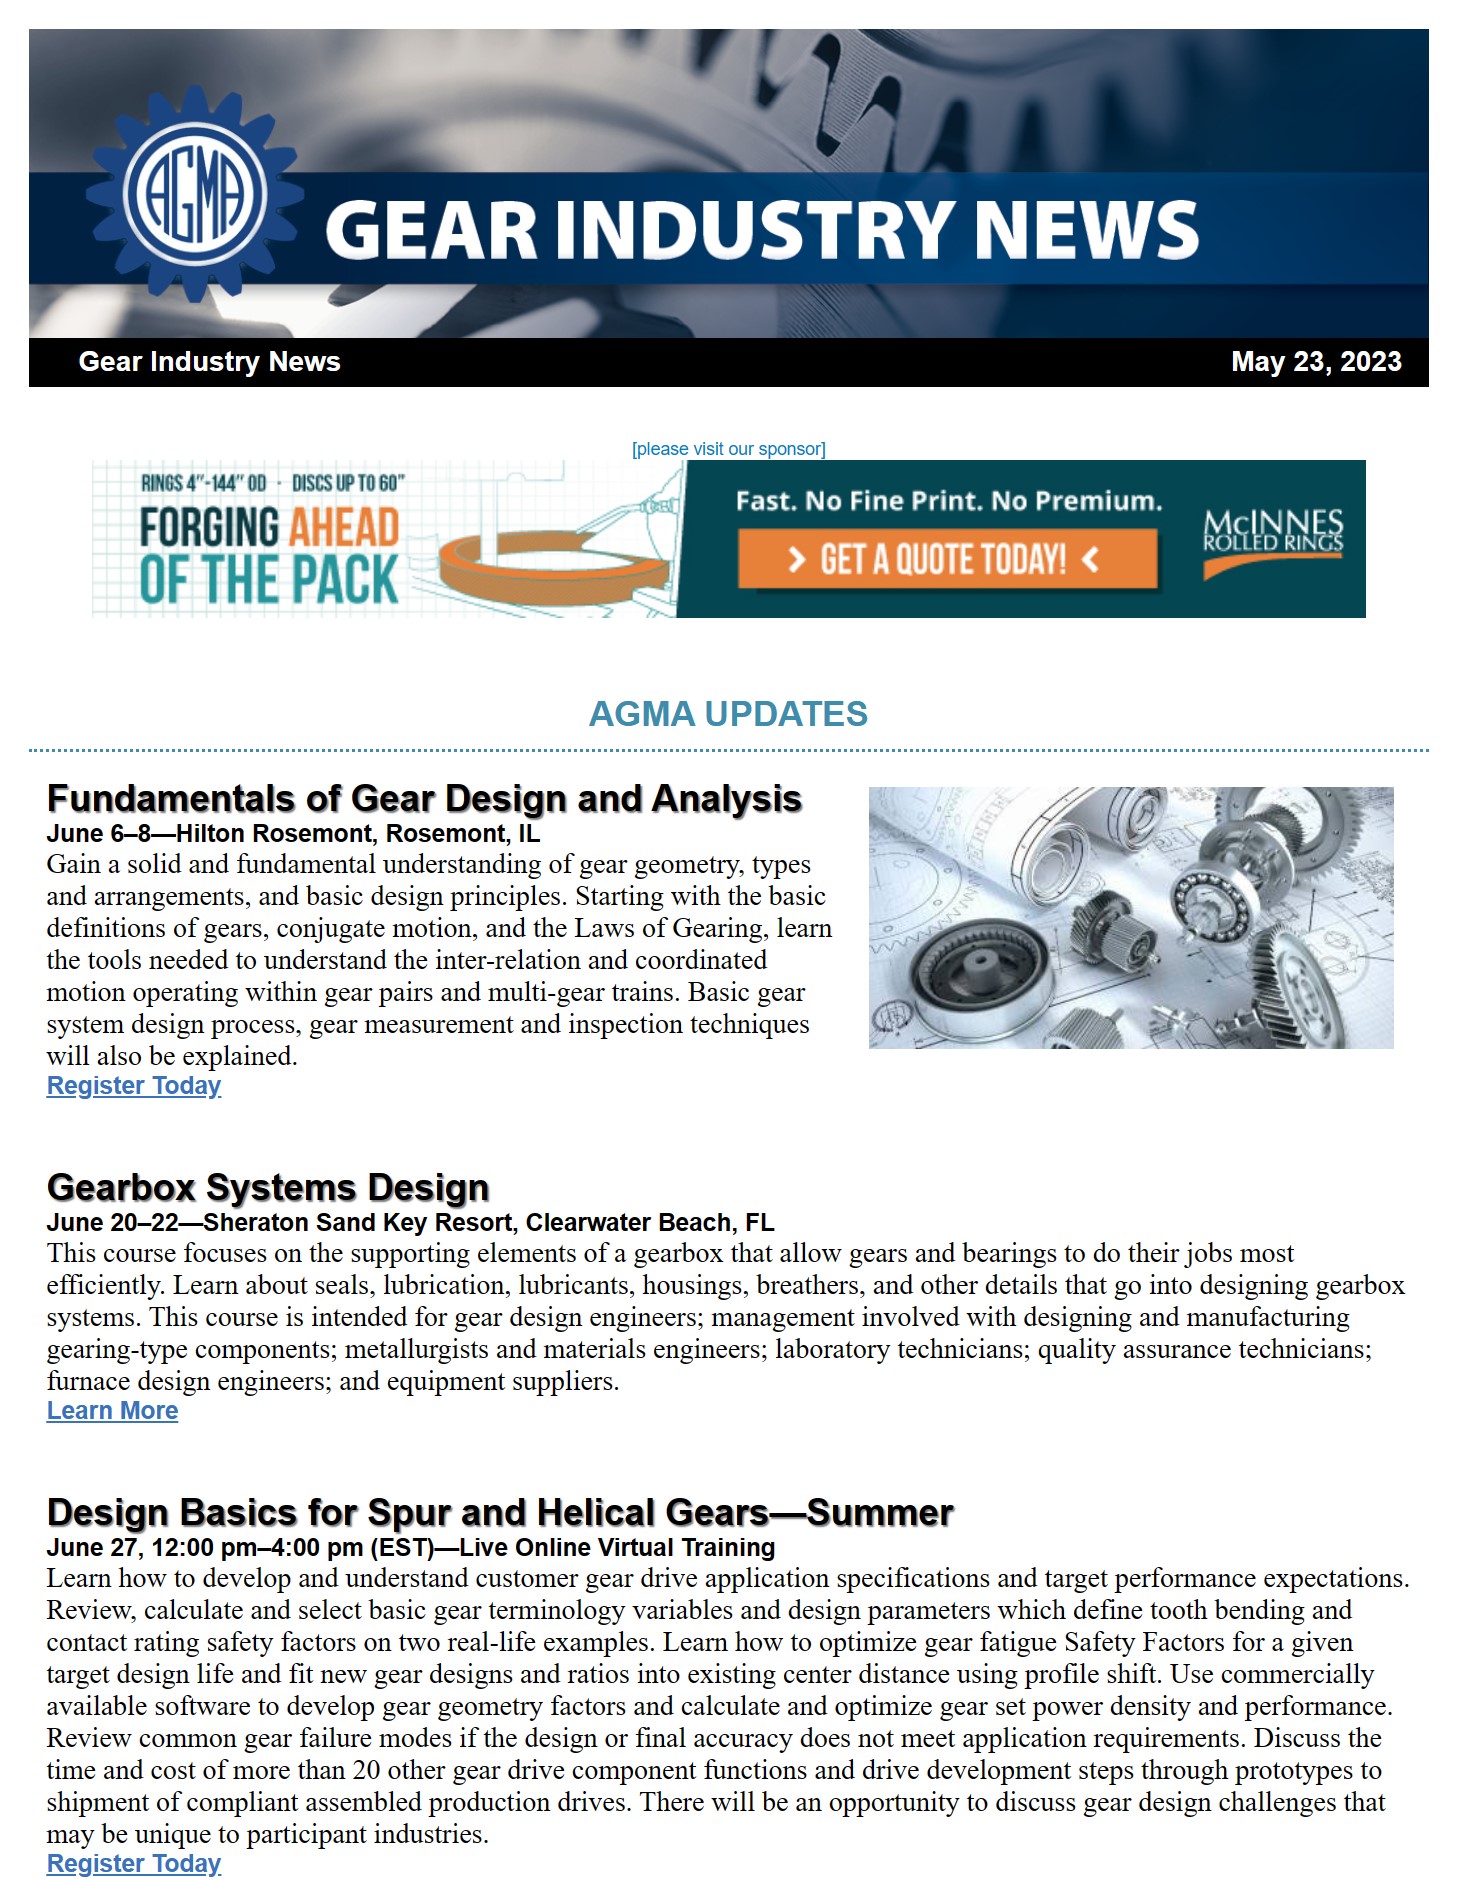 AGMA Gear Industry News